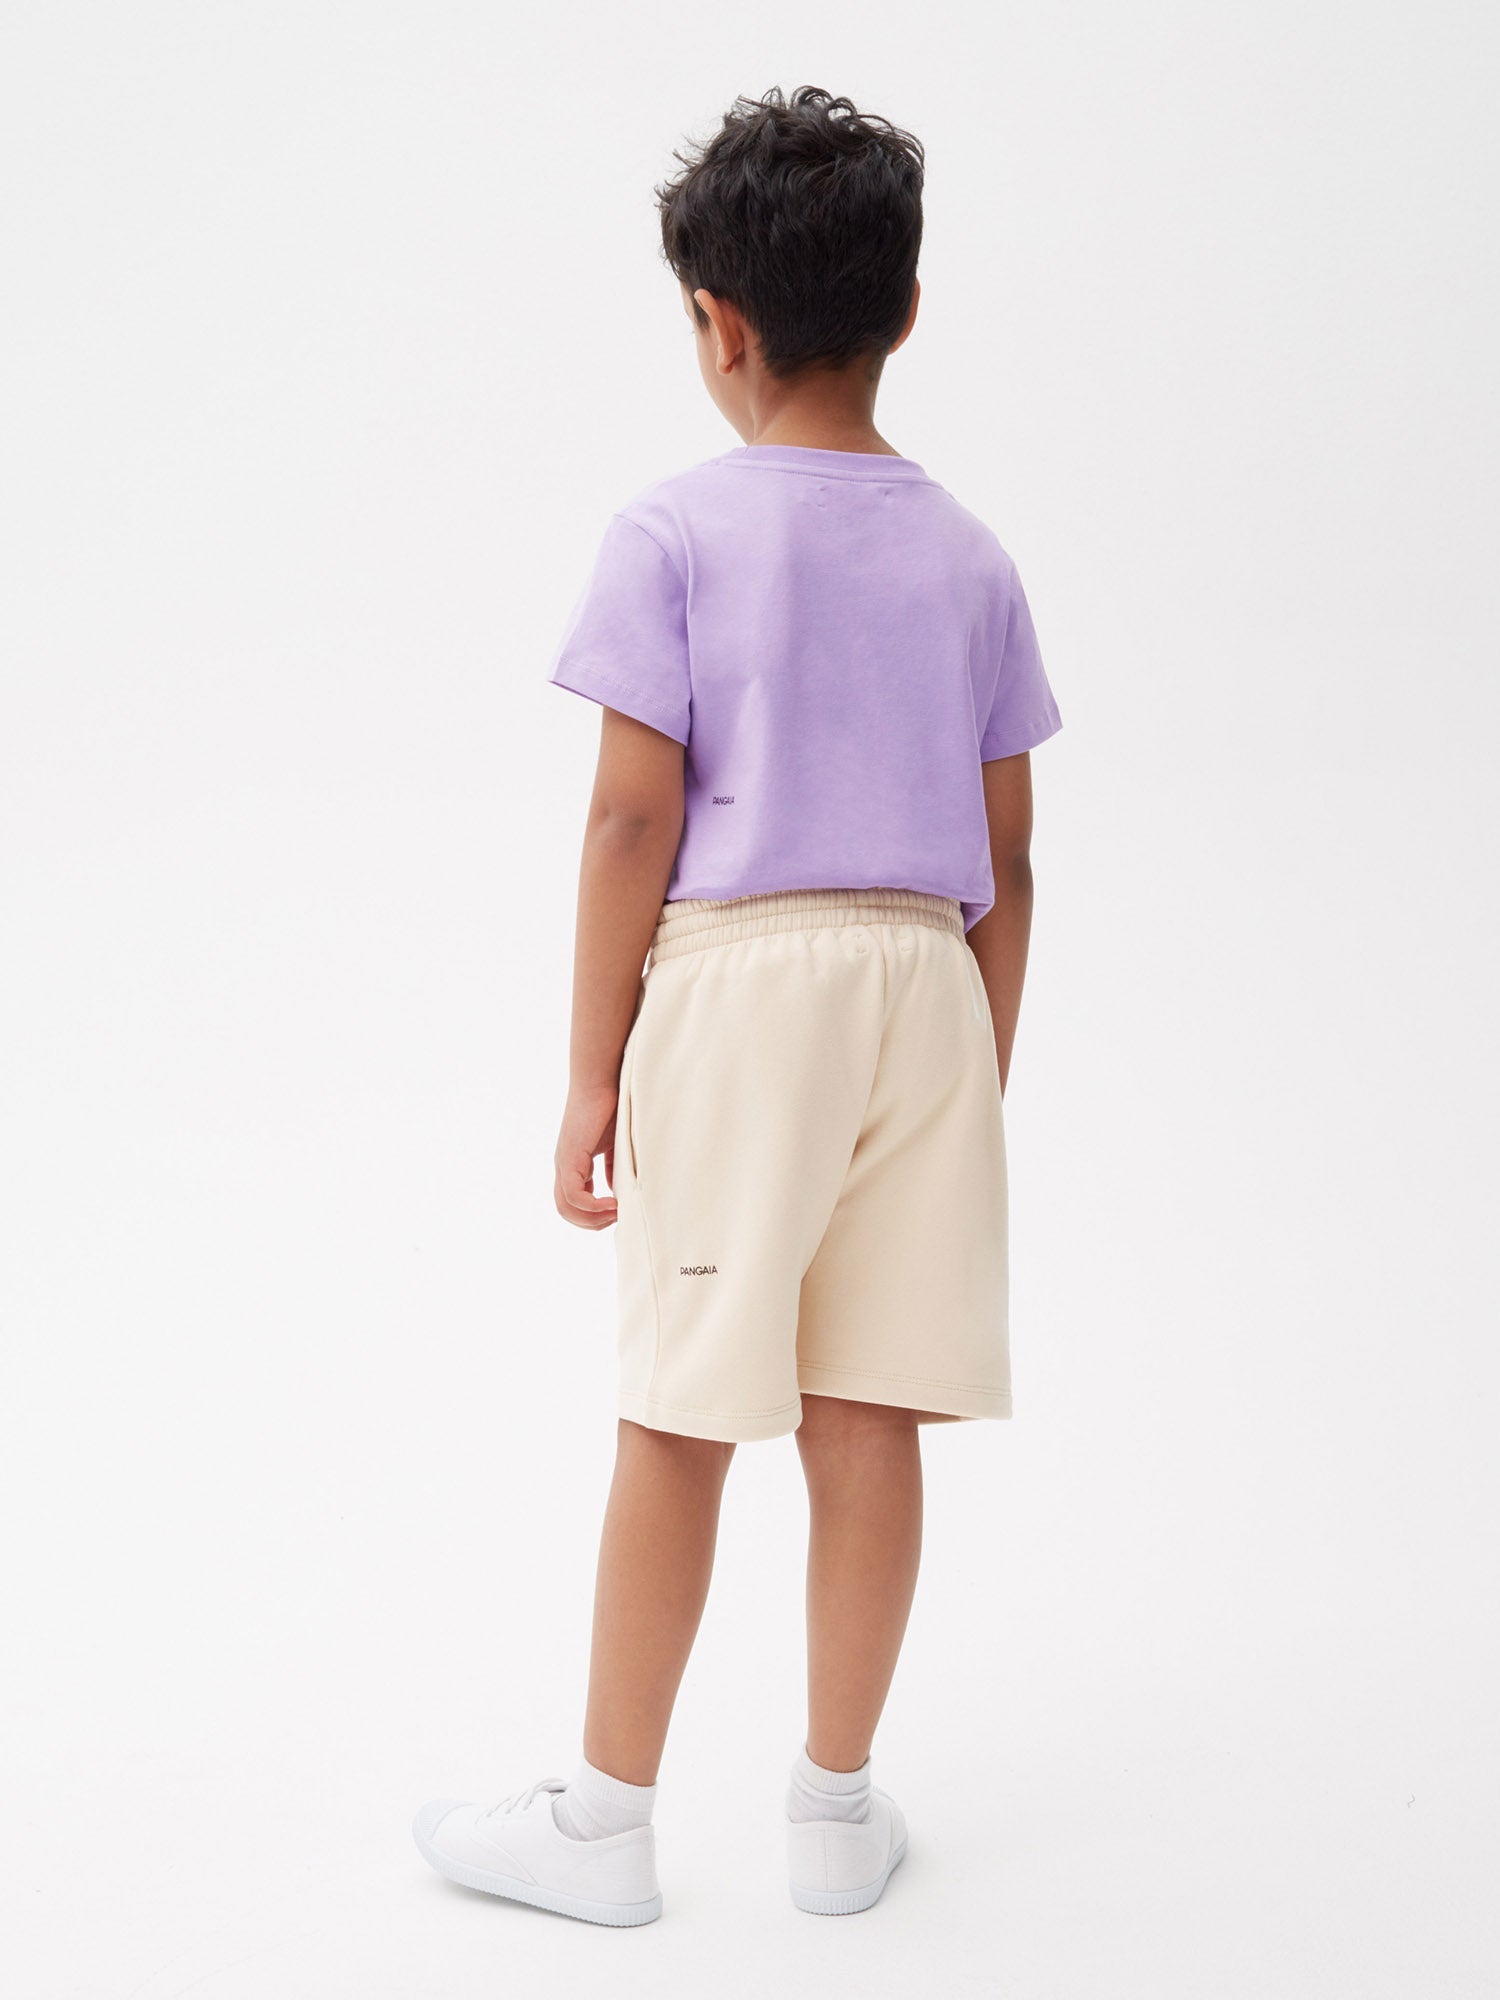 Kids Organic Cotton Long Shorts Sand